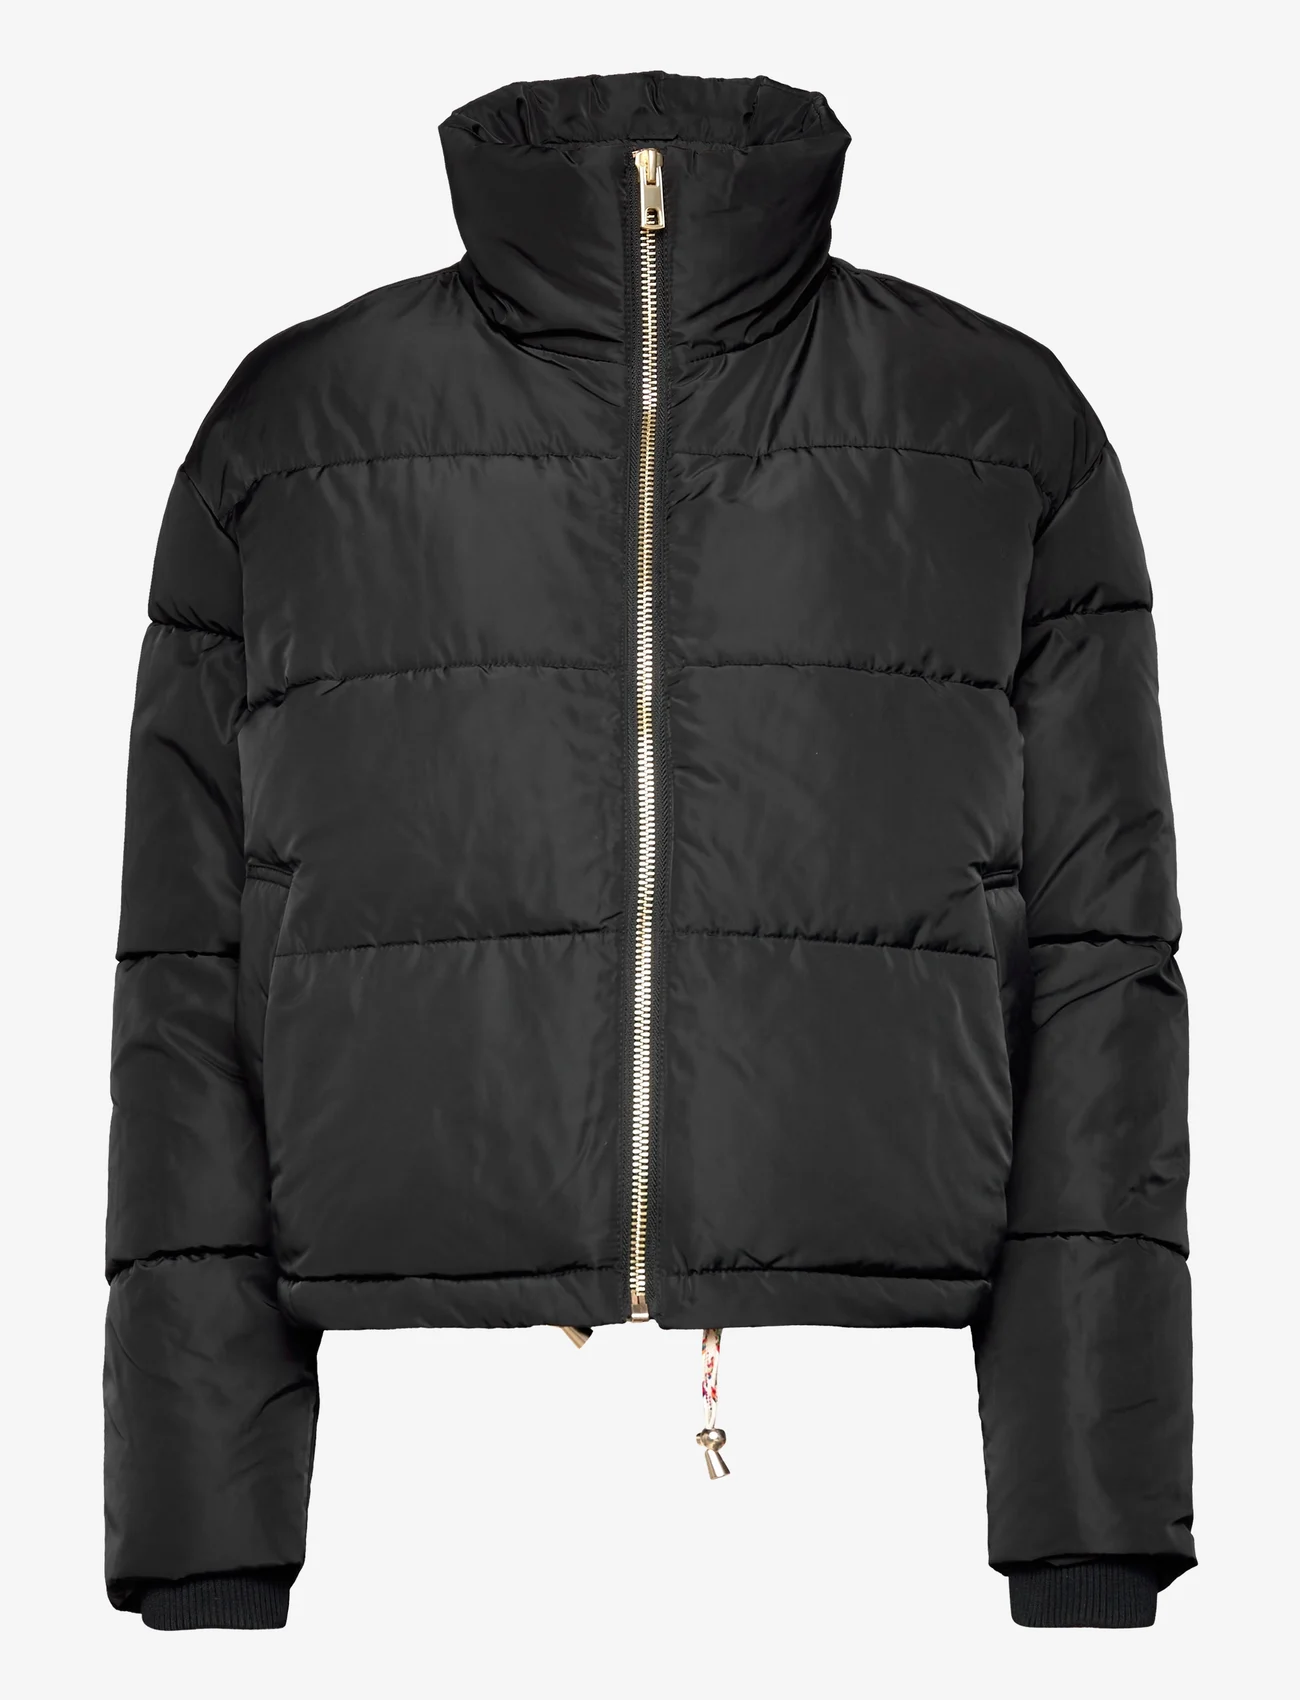 Coster Copenhagen - Short puffer jacket - talvitakit - black - 0